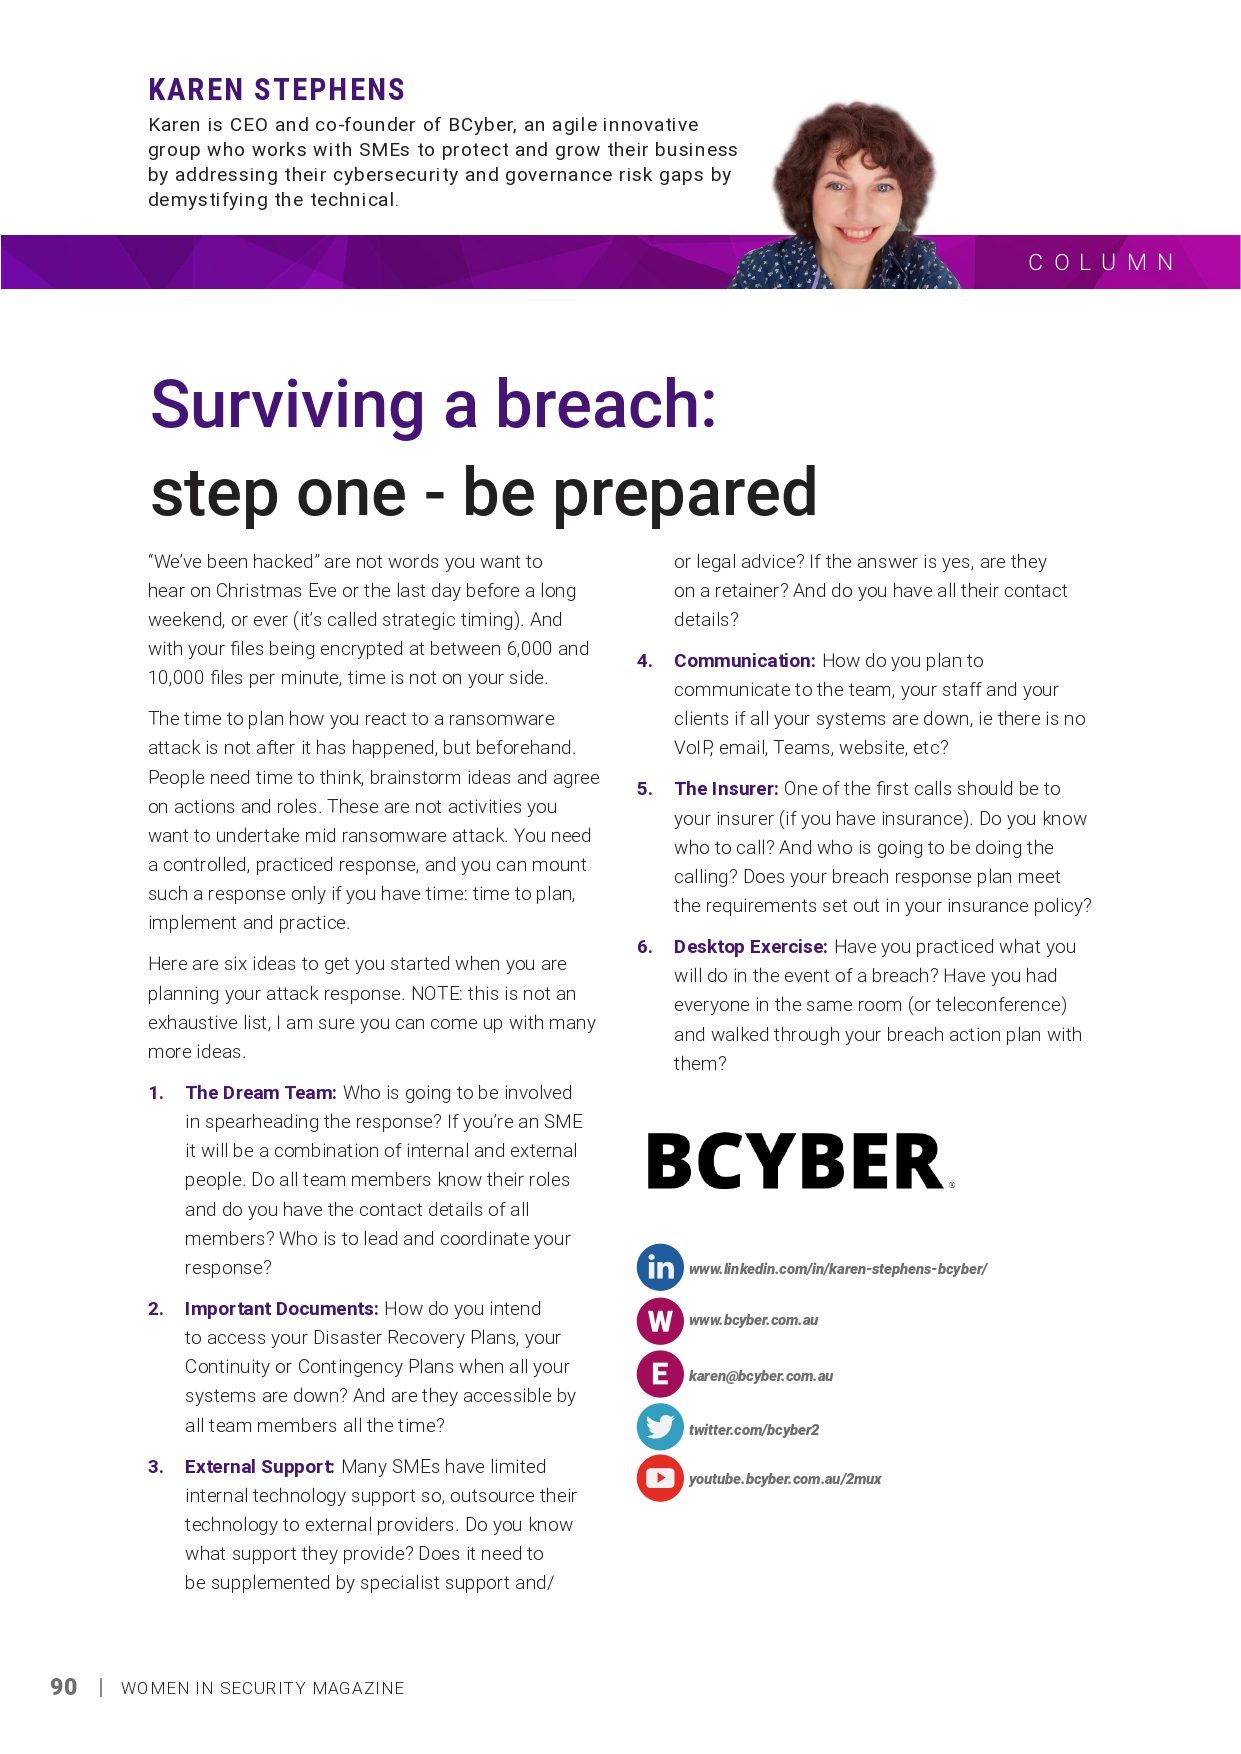 Surviving a breach: step one - be prepared - Karen Stephens